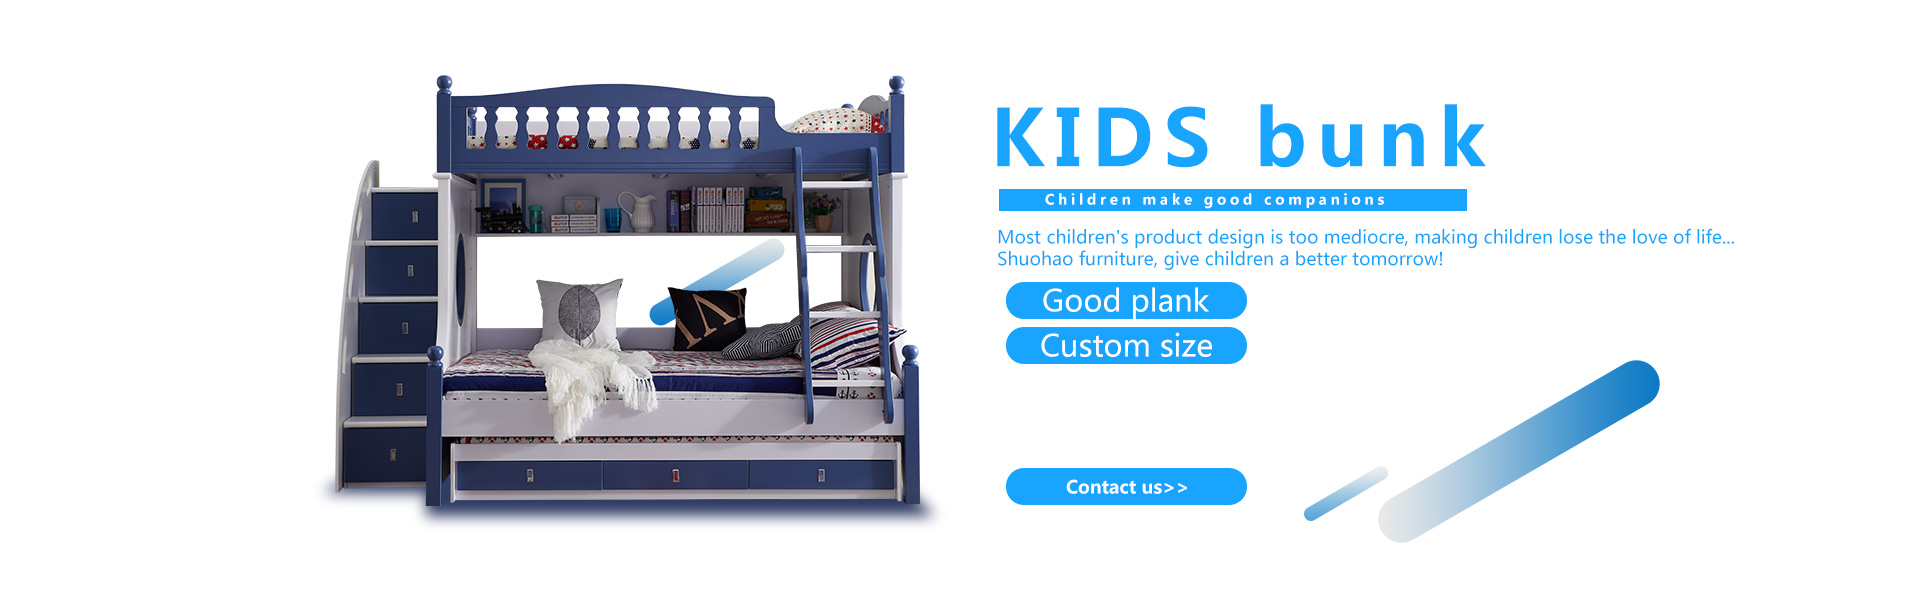 KIDS bunk